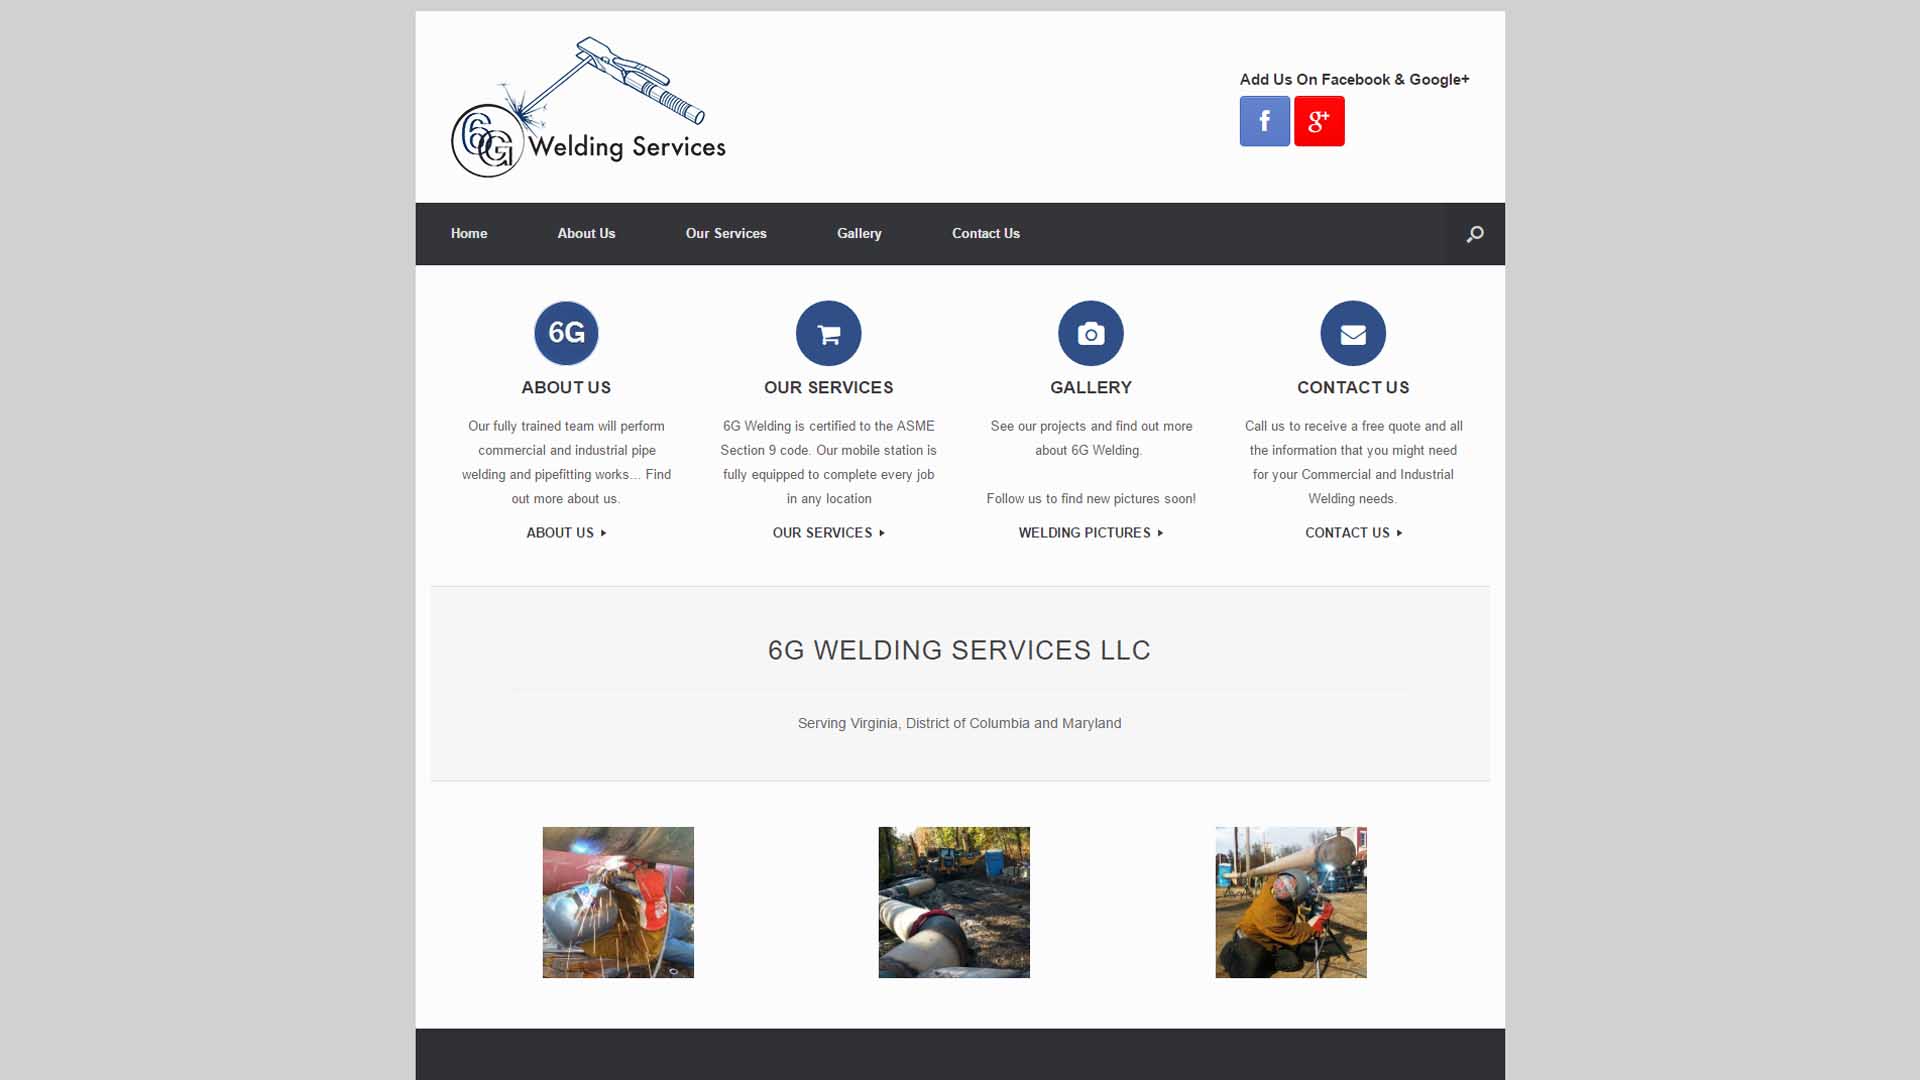 6G Welding Services, LLC